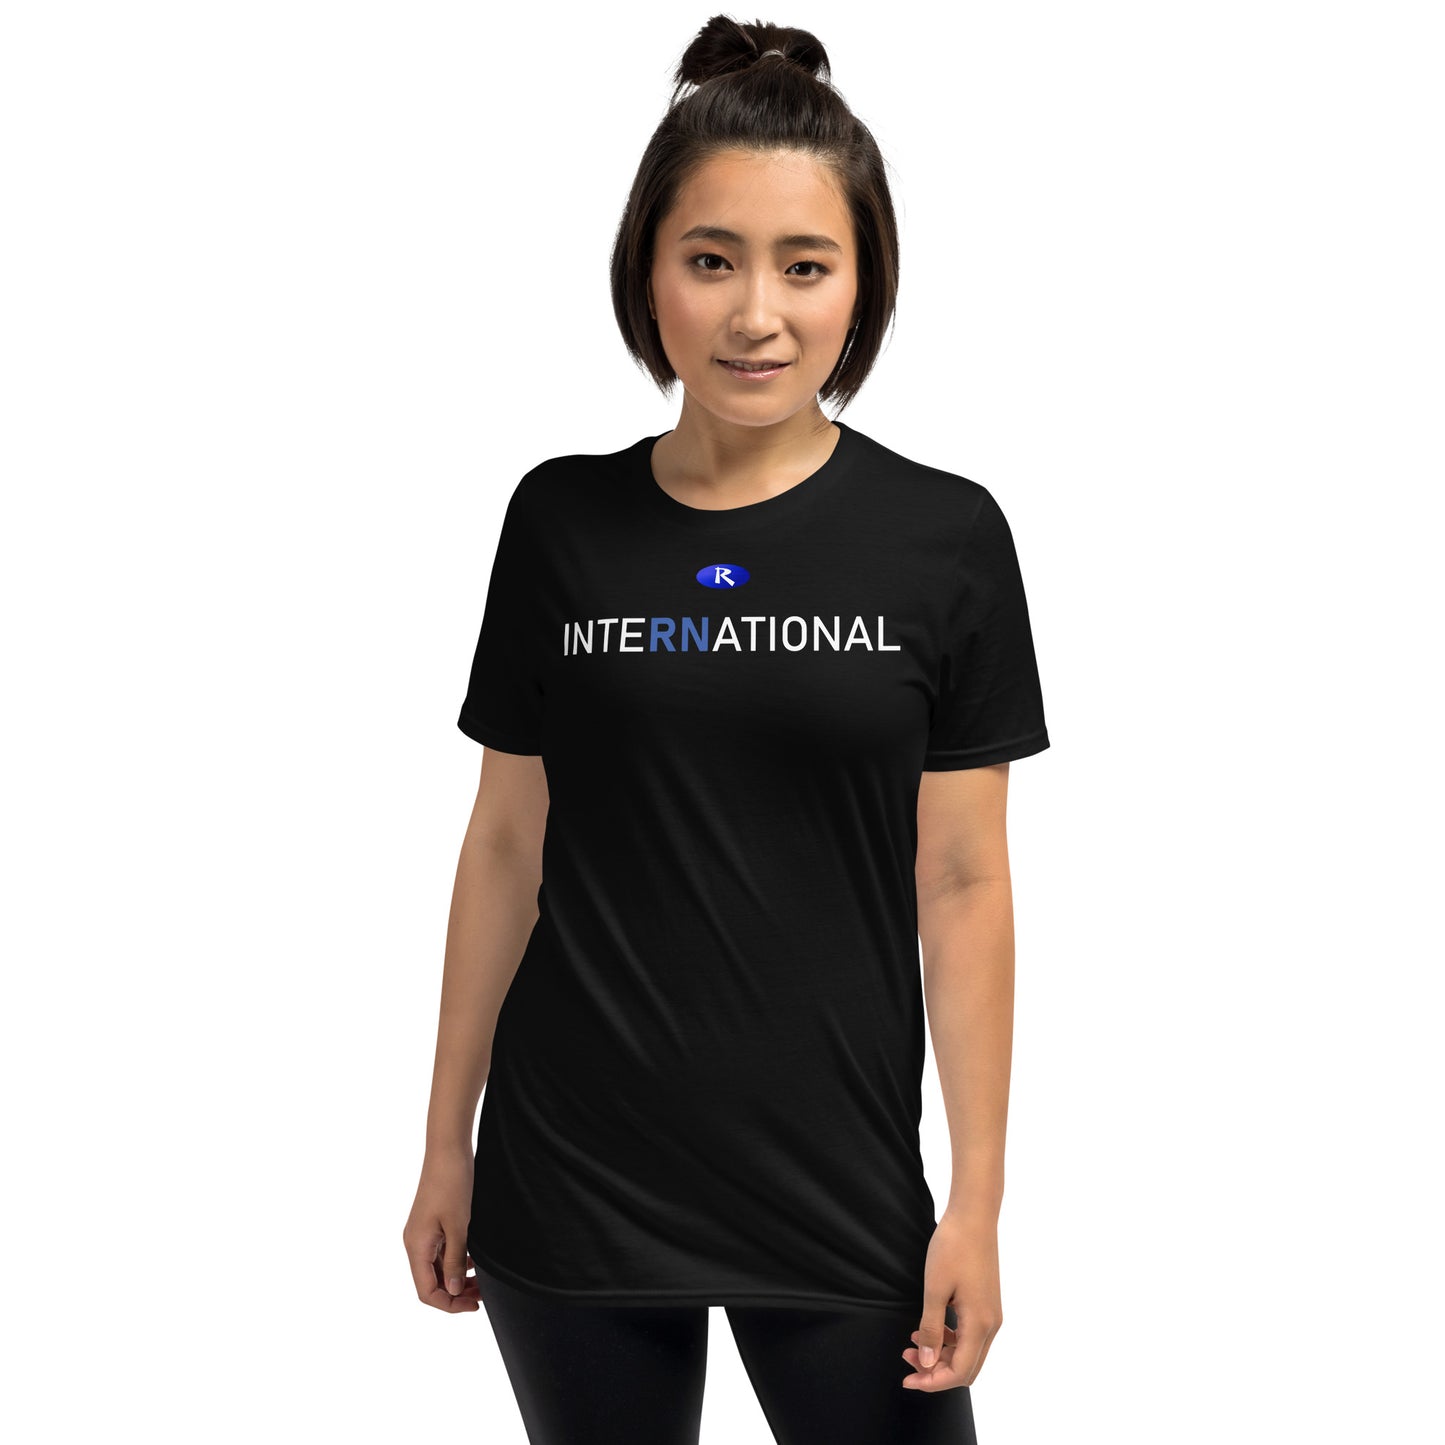 InteRNational Unisex T-Shirt